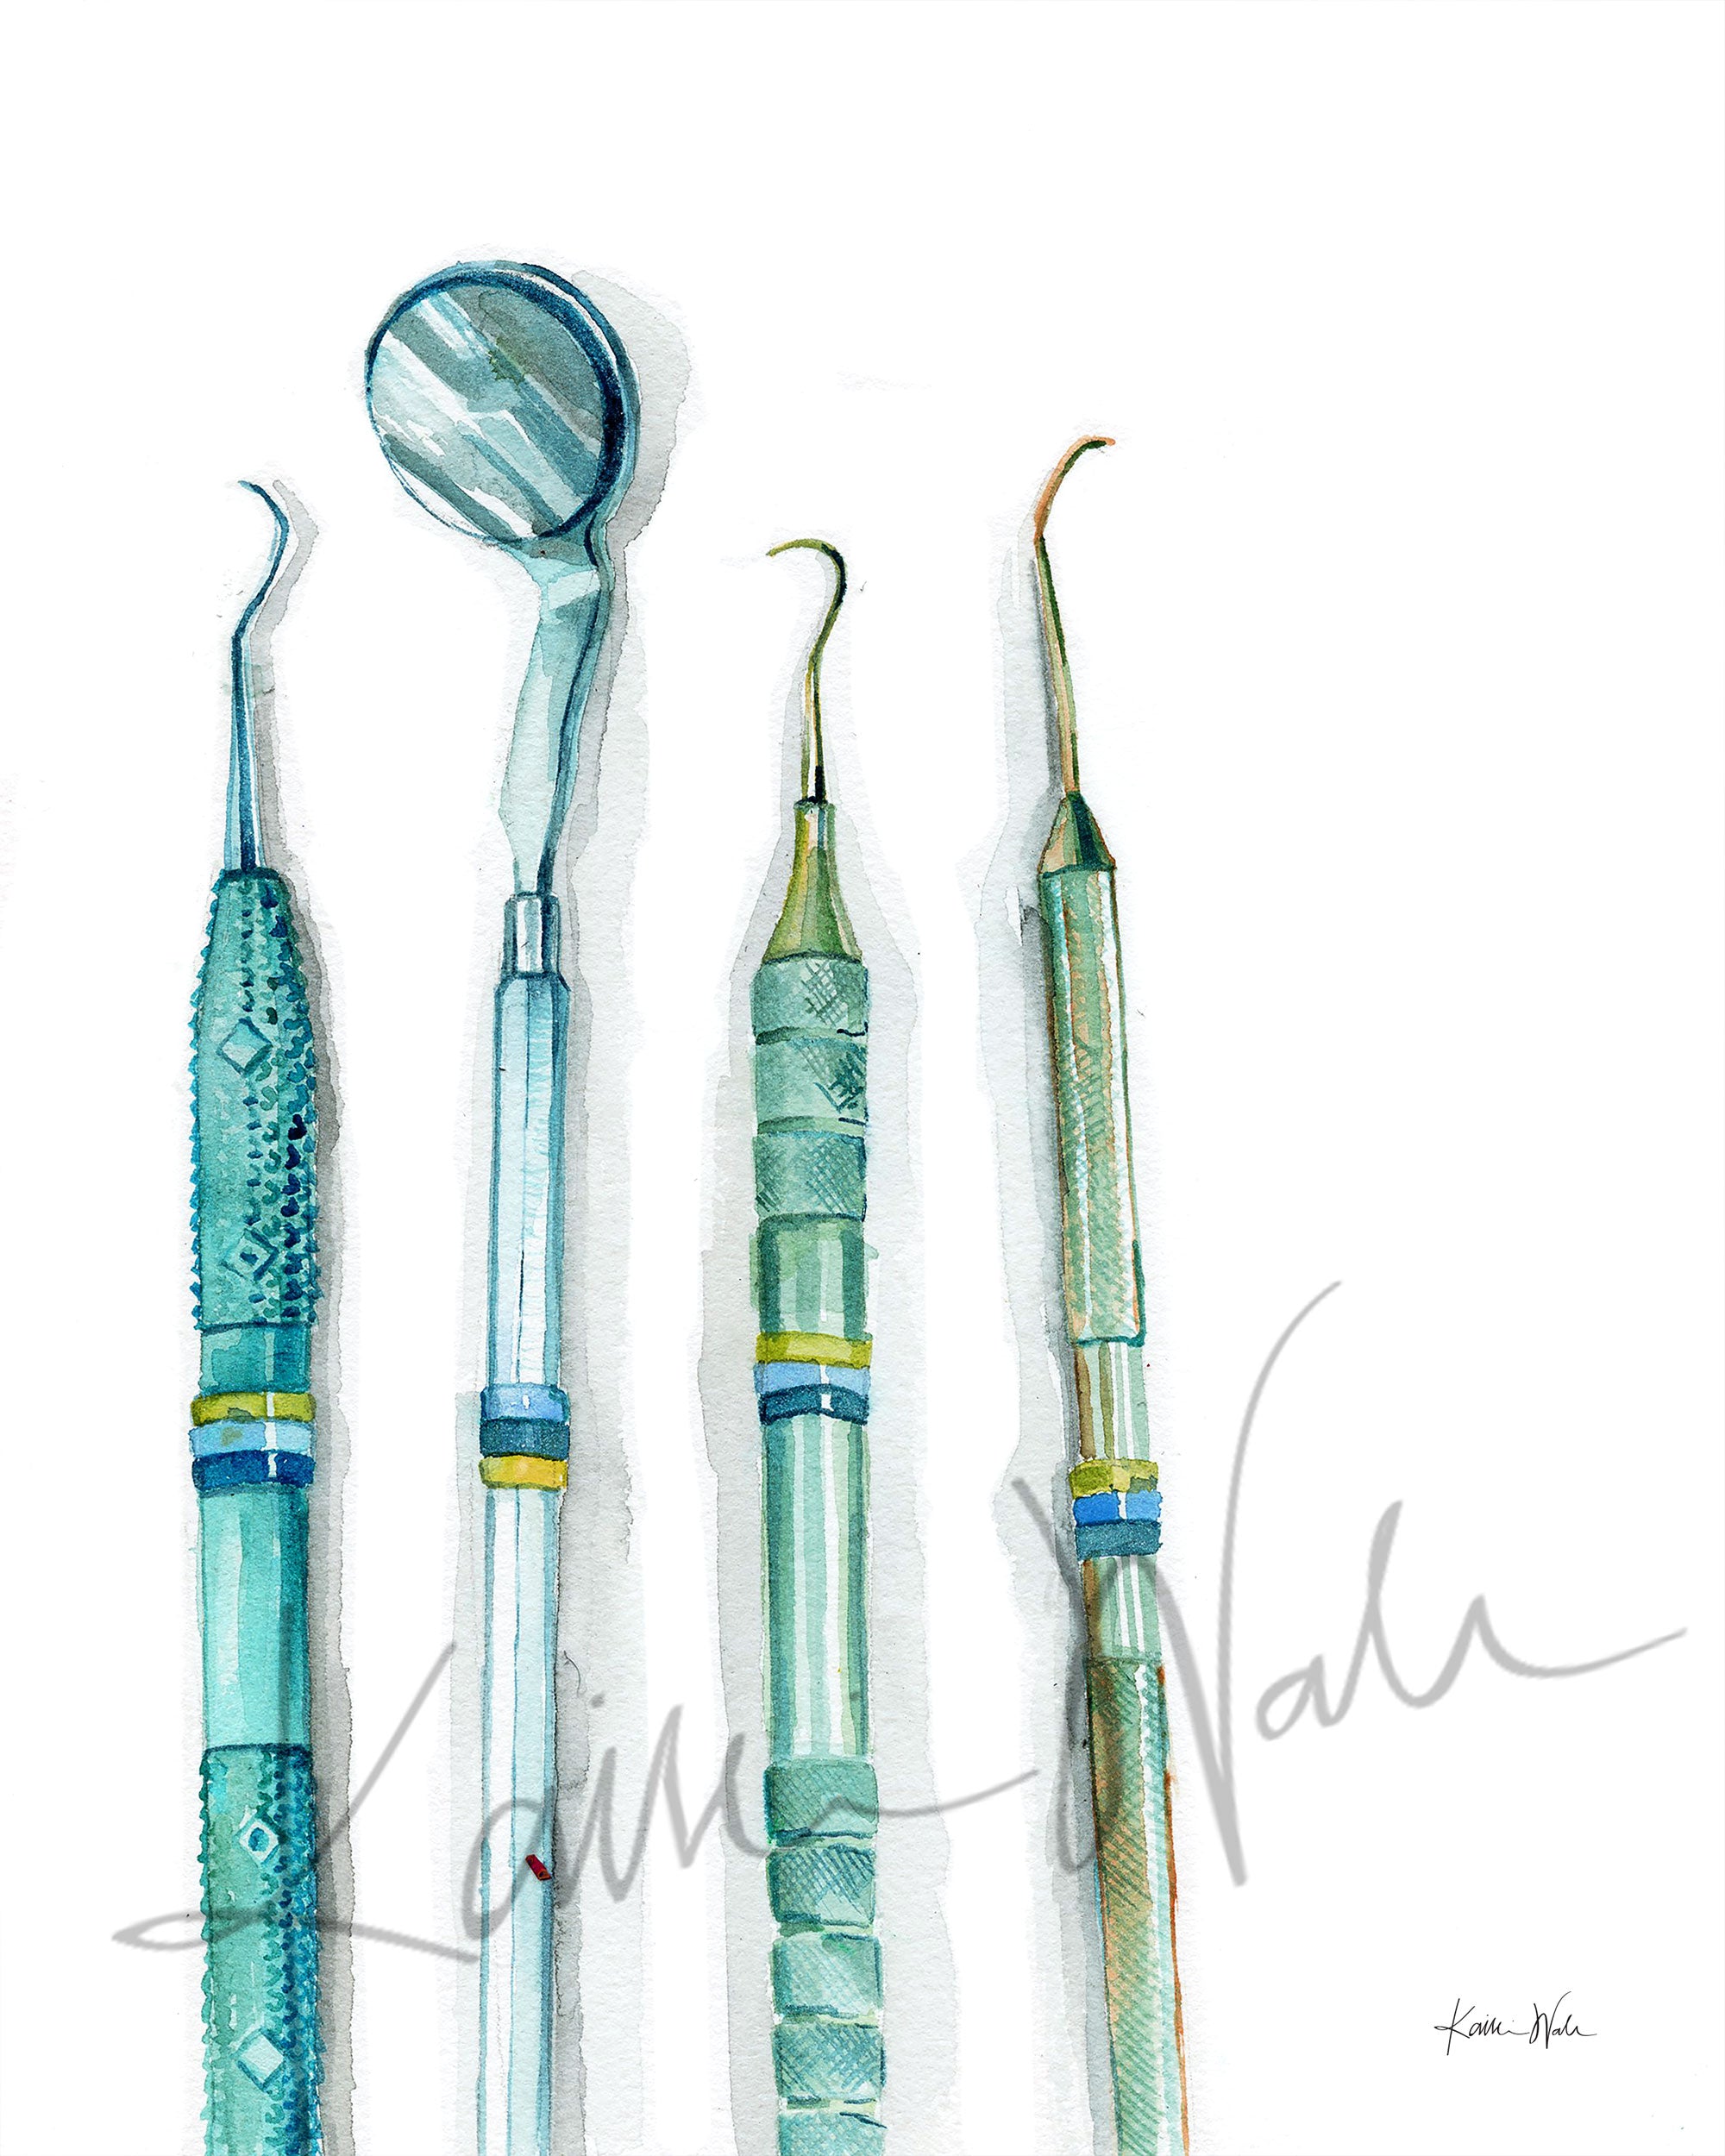 Unframed watercolor print of dental hygienist tools.